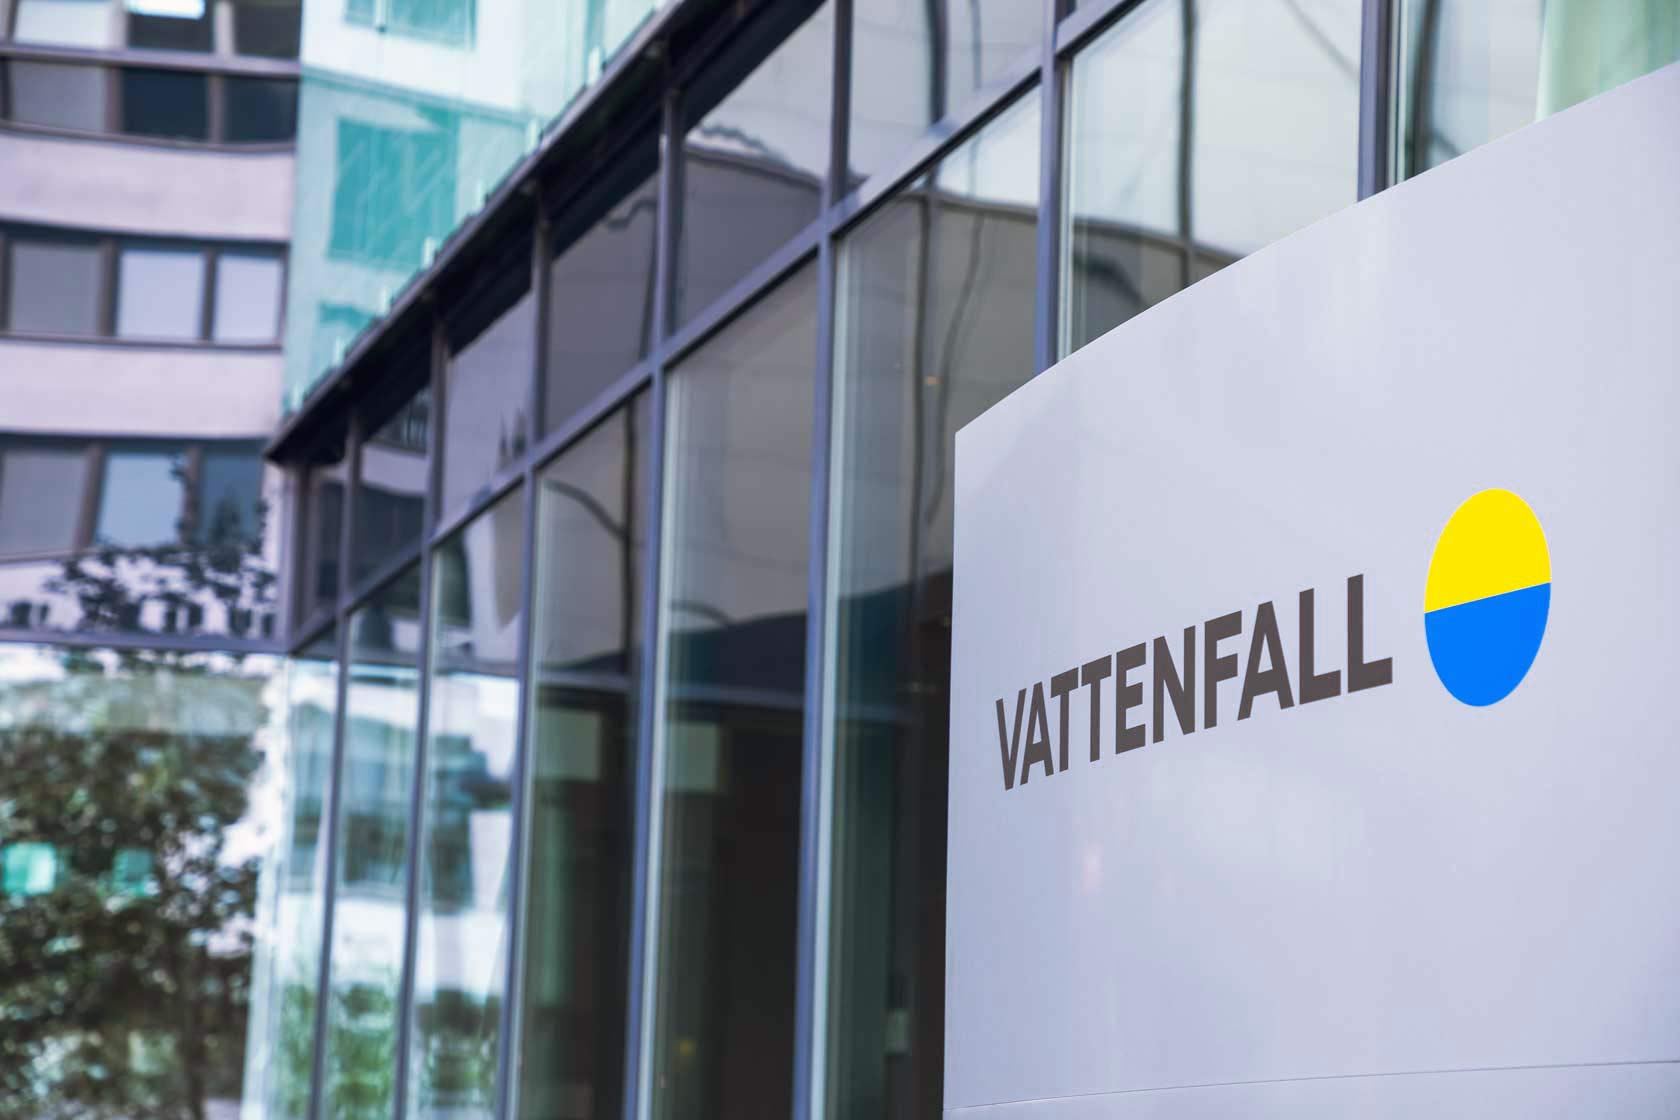 Vattenfall's head office in Solna